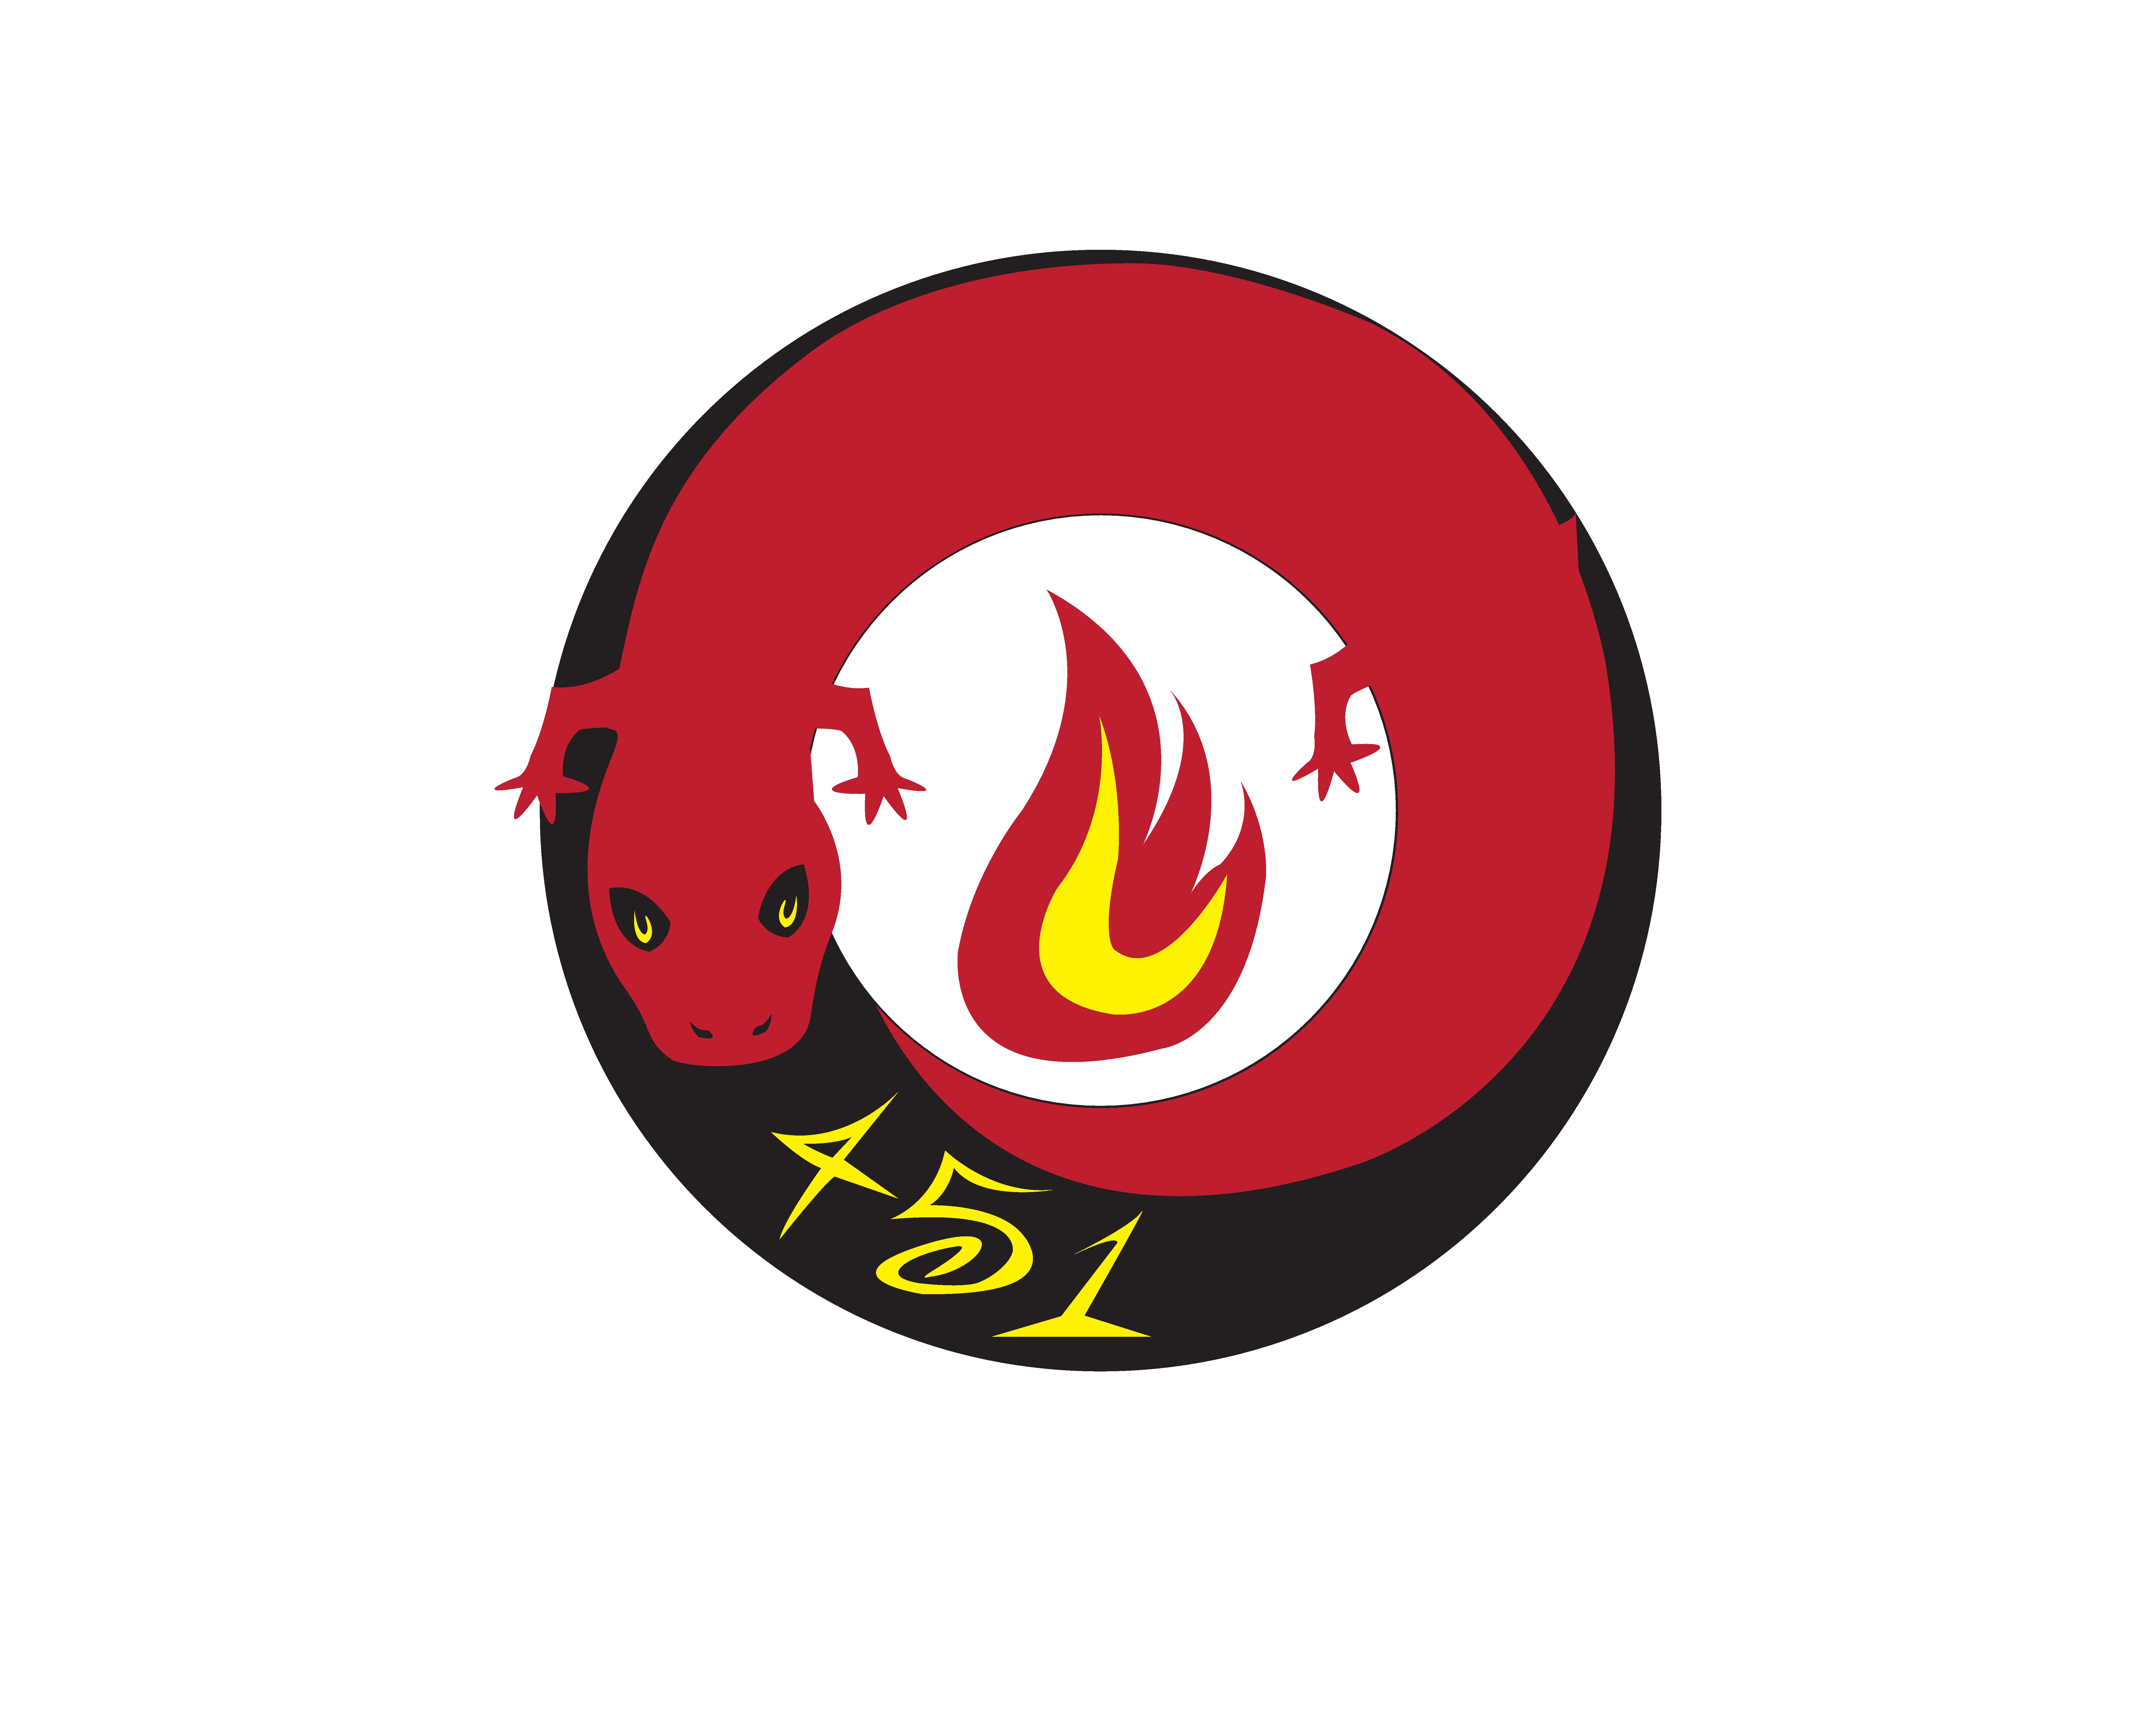 Fahrenheit 451 Guy Montag Helmet Logo by chibi-cupcake on DeviantArt